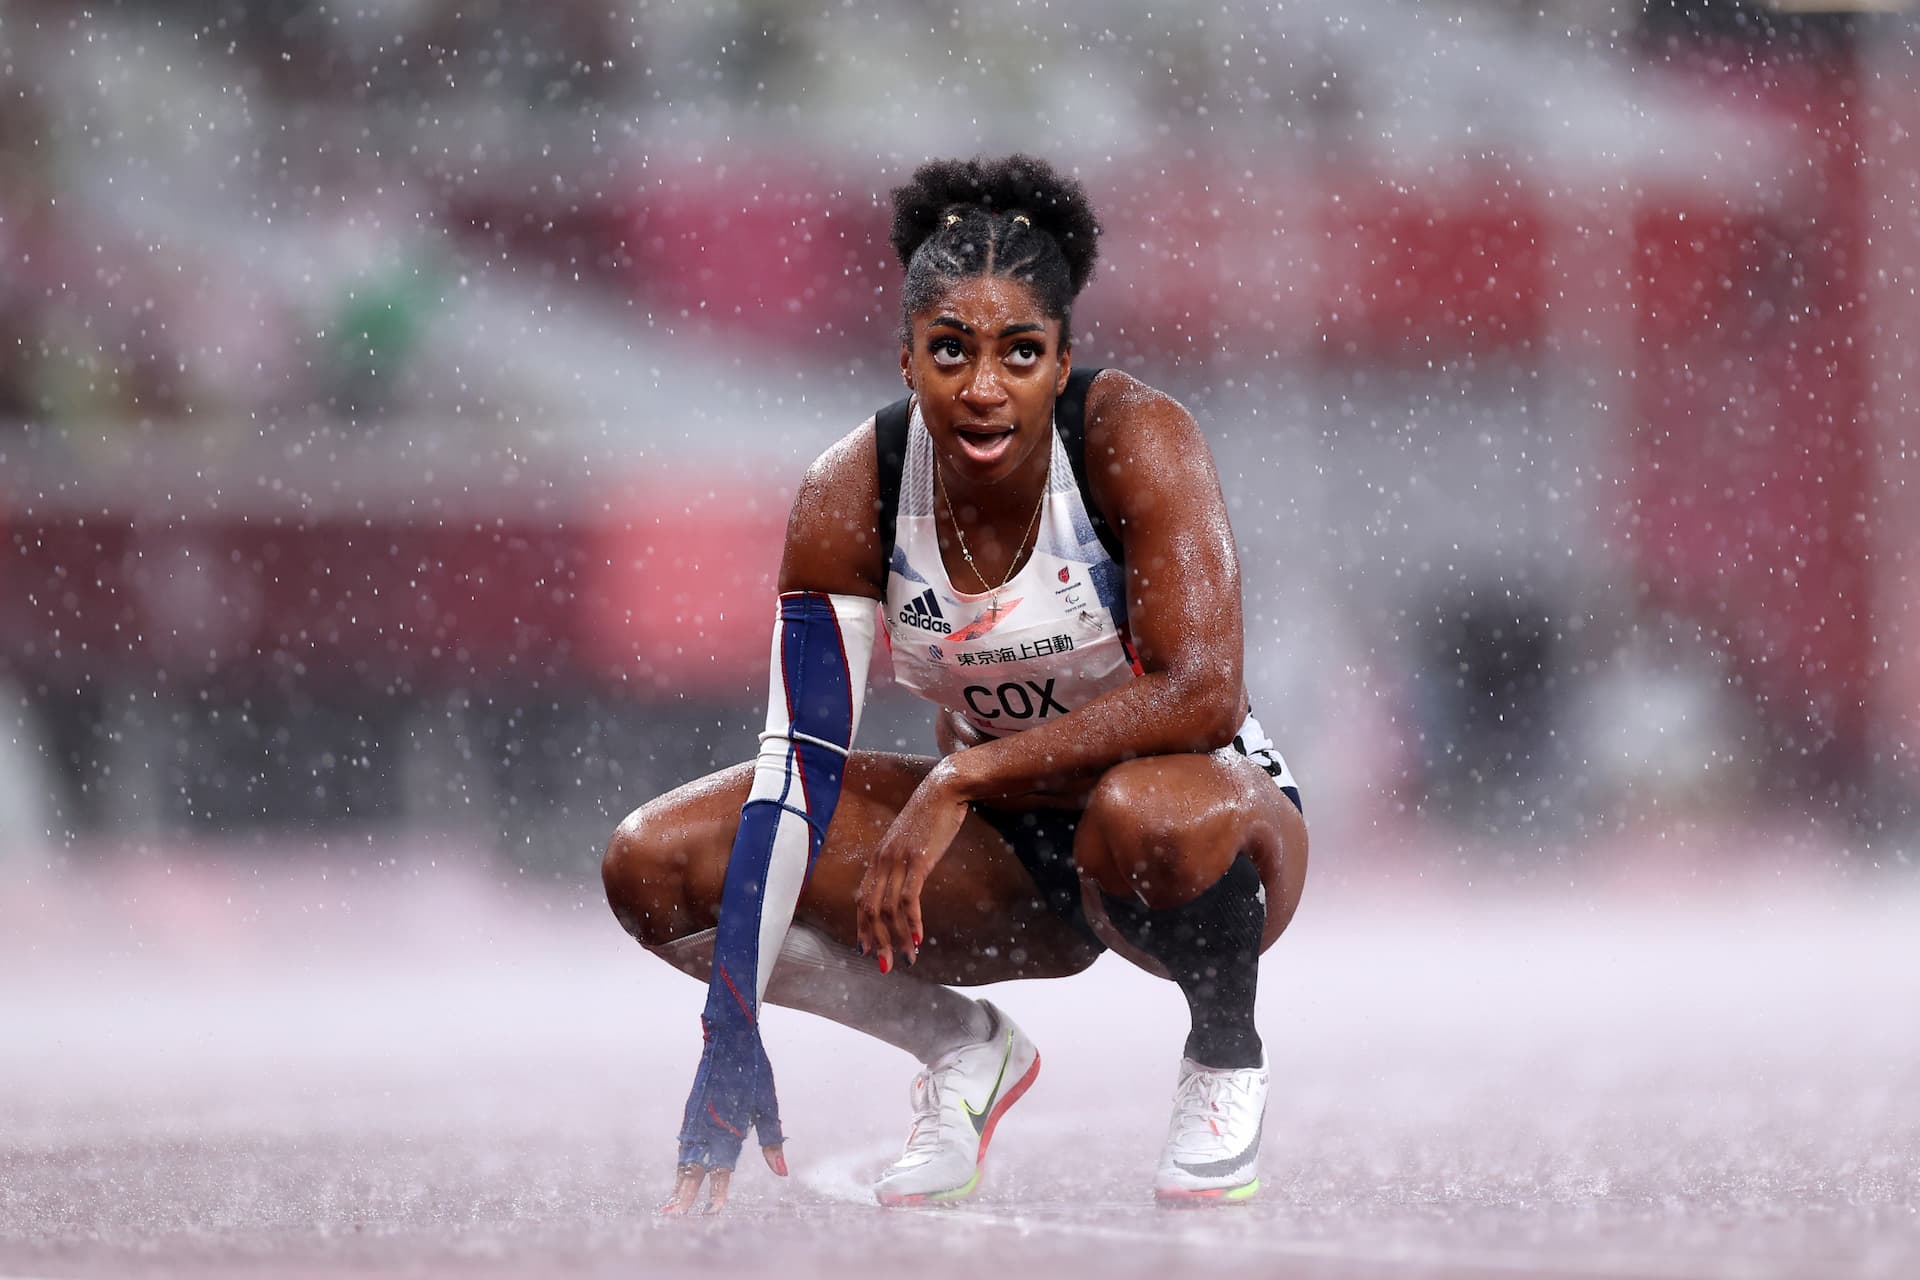 Parasport athlete Kadeena Cox crouching on track